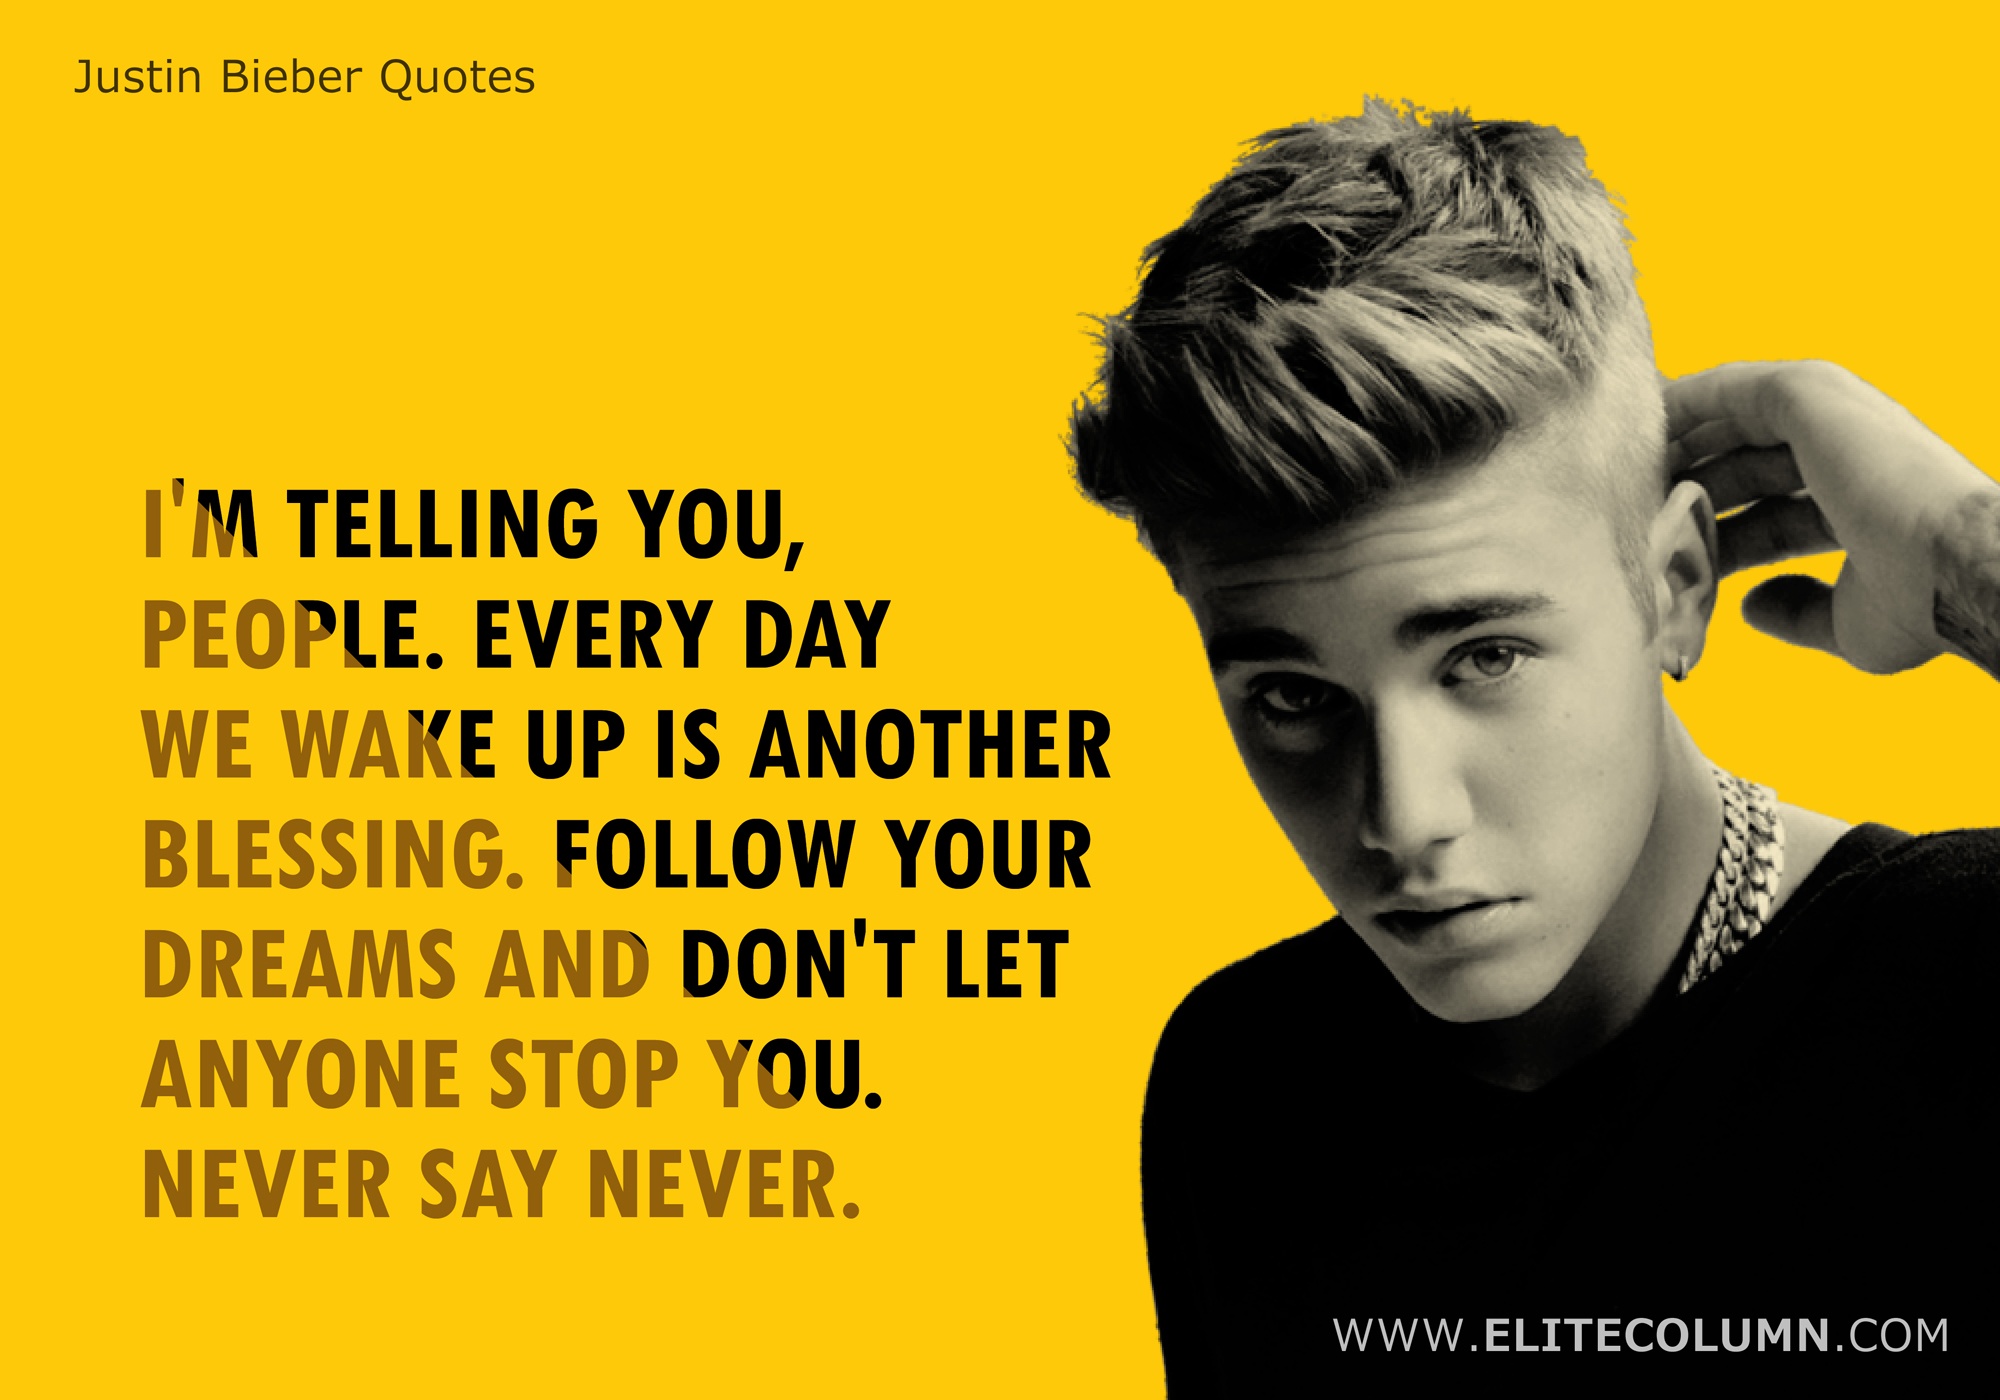 8 Inspirational Justin Bieber Quotes